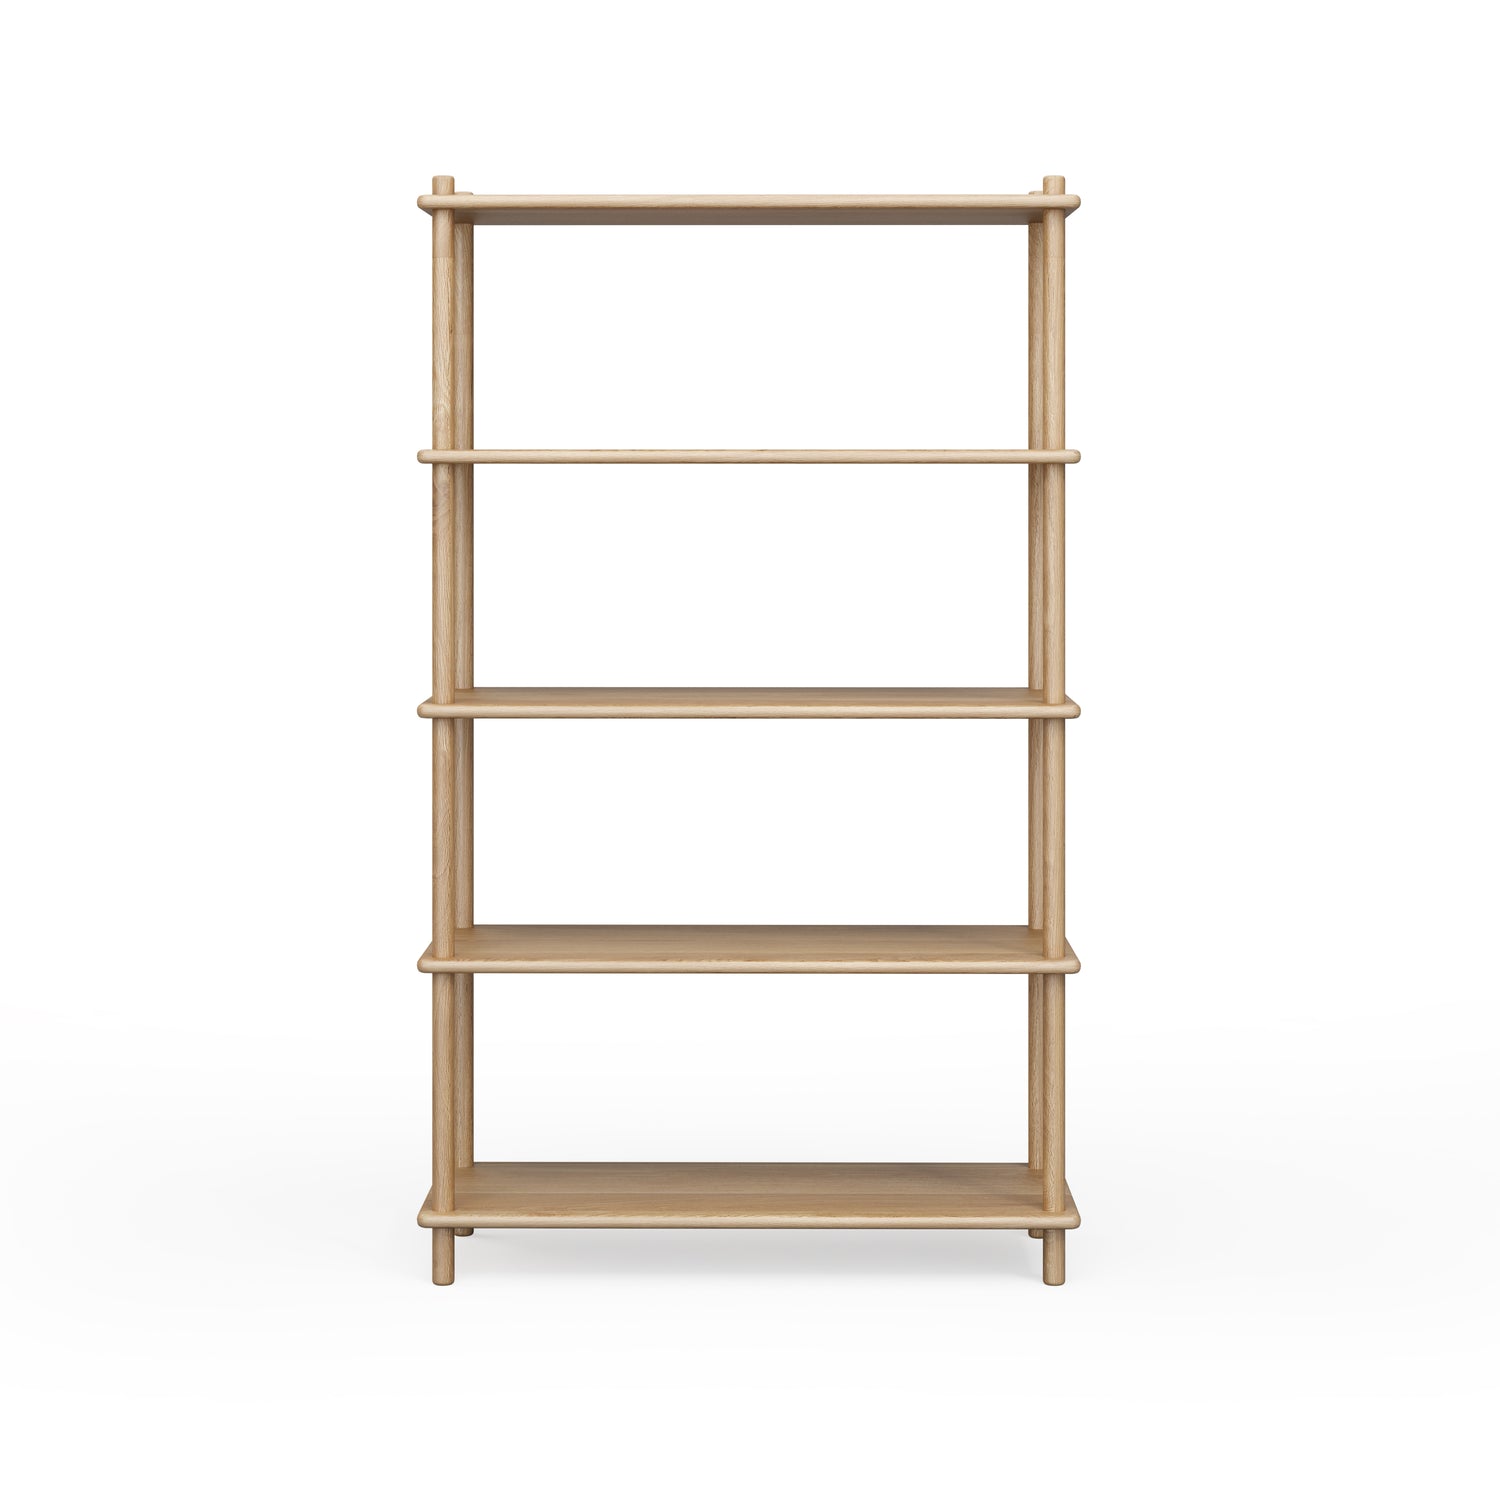 Simple bookshelf